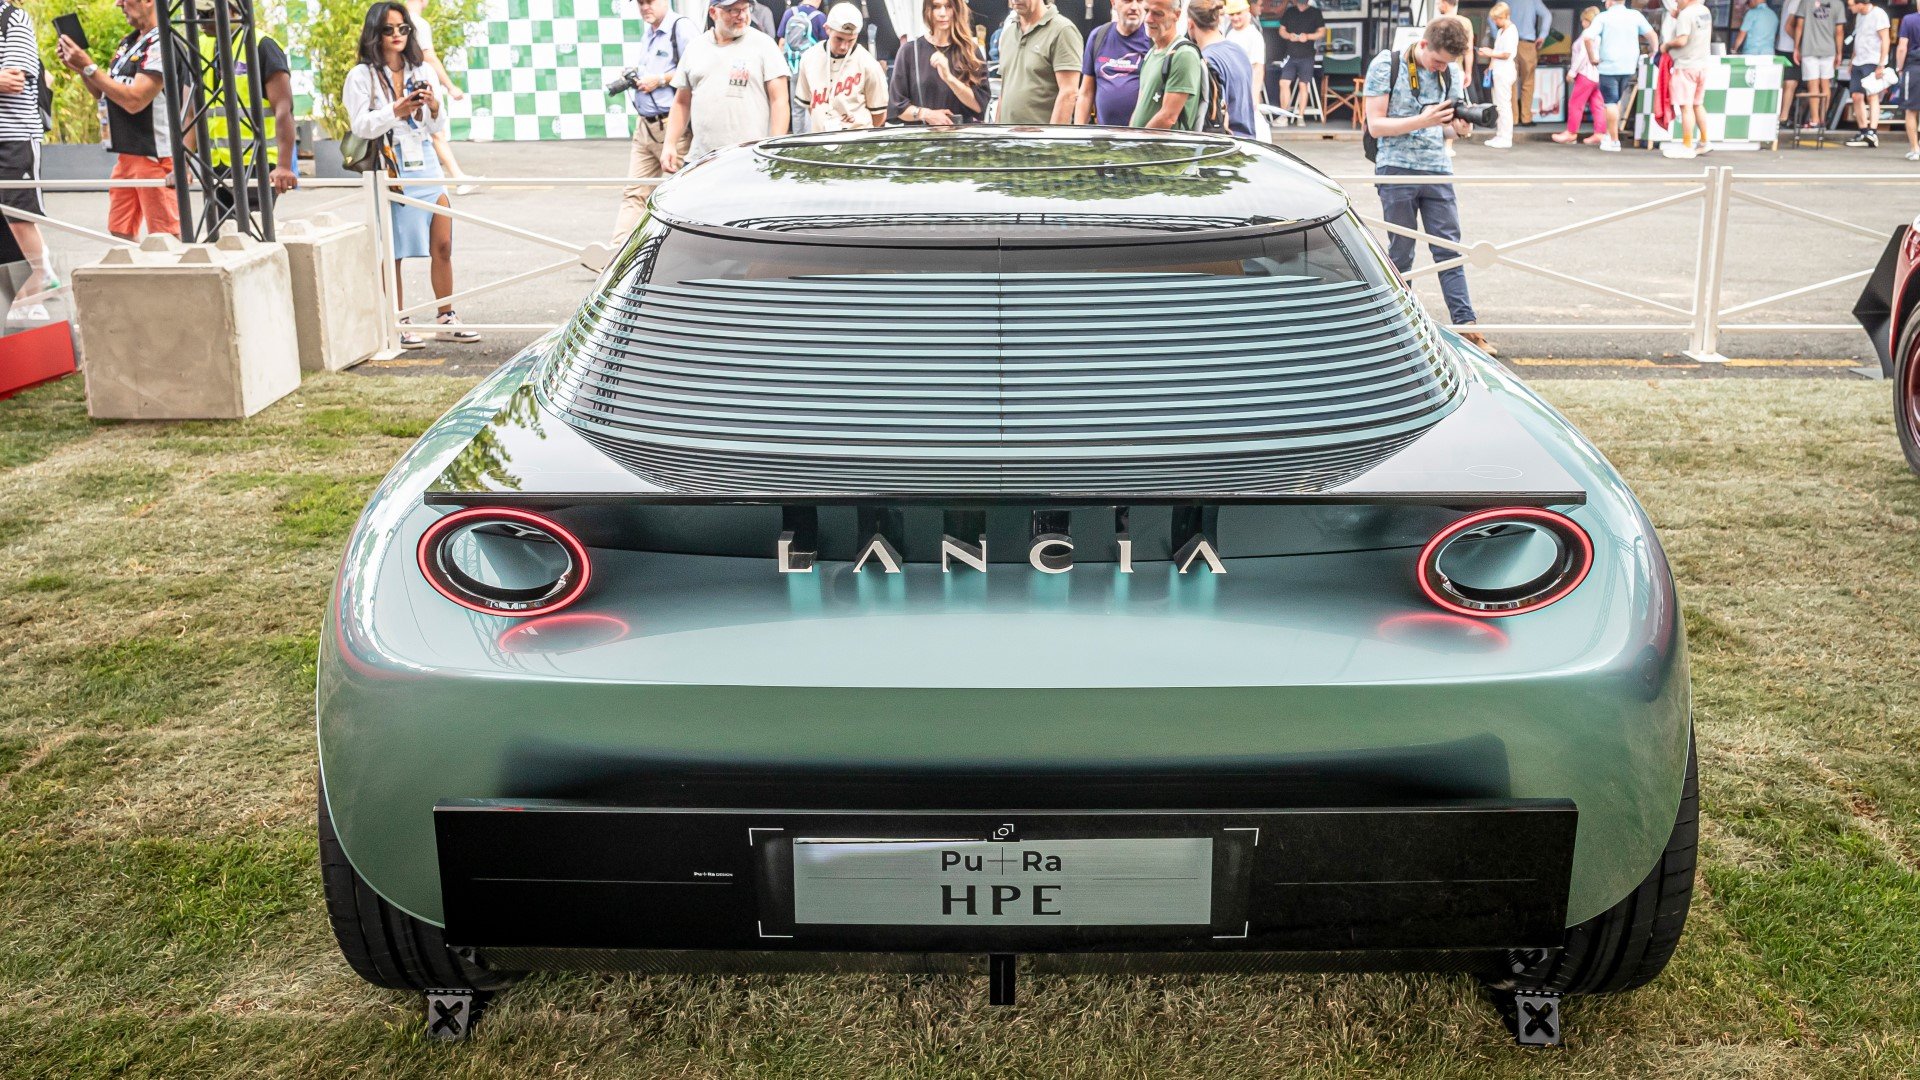 Lancia Pu+Ra HPE: Στην Γαλλία η πρώτη δημόσια εμφάνιση